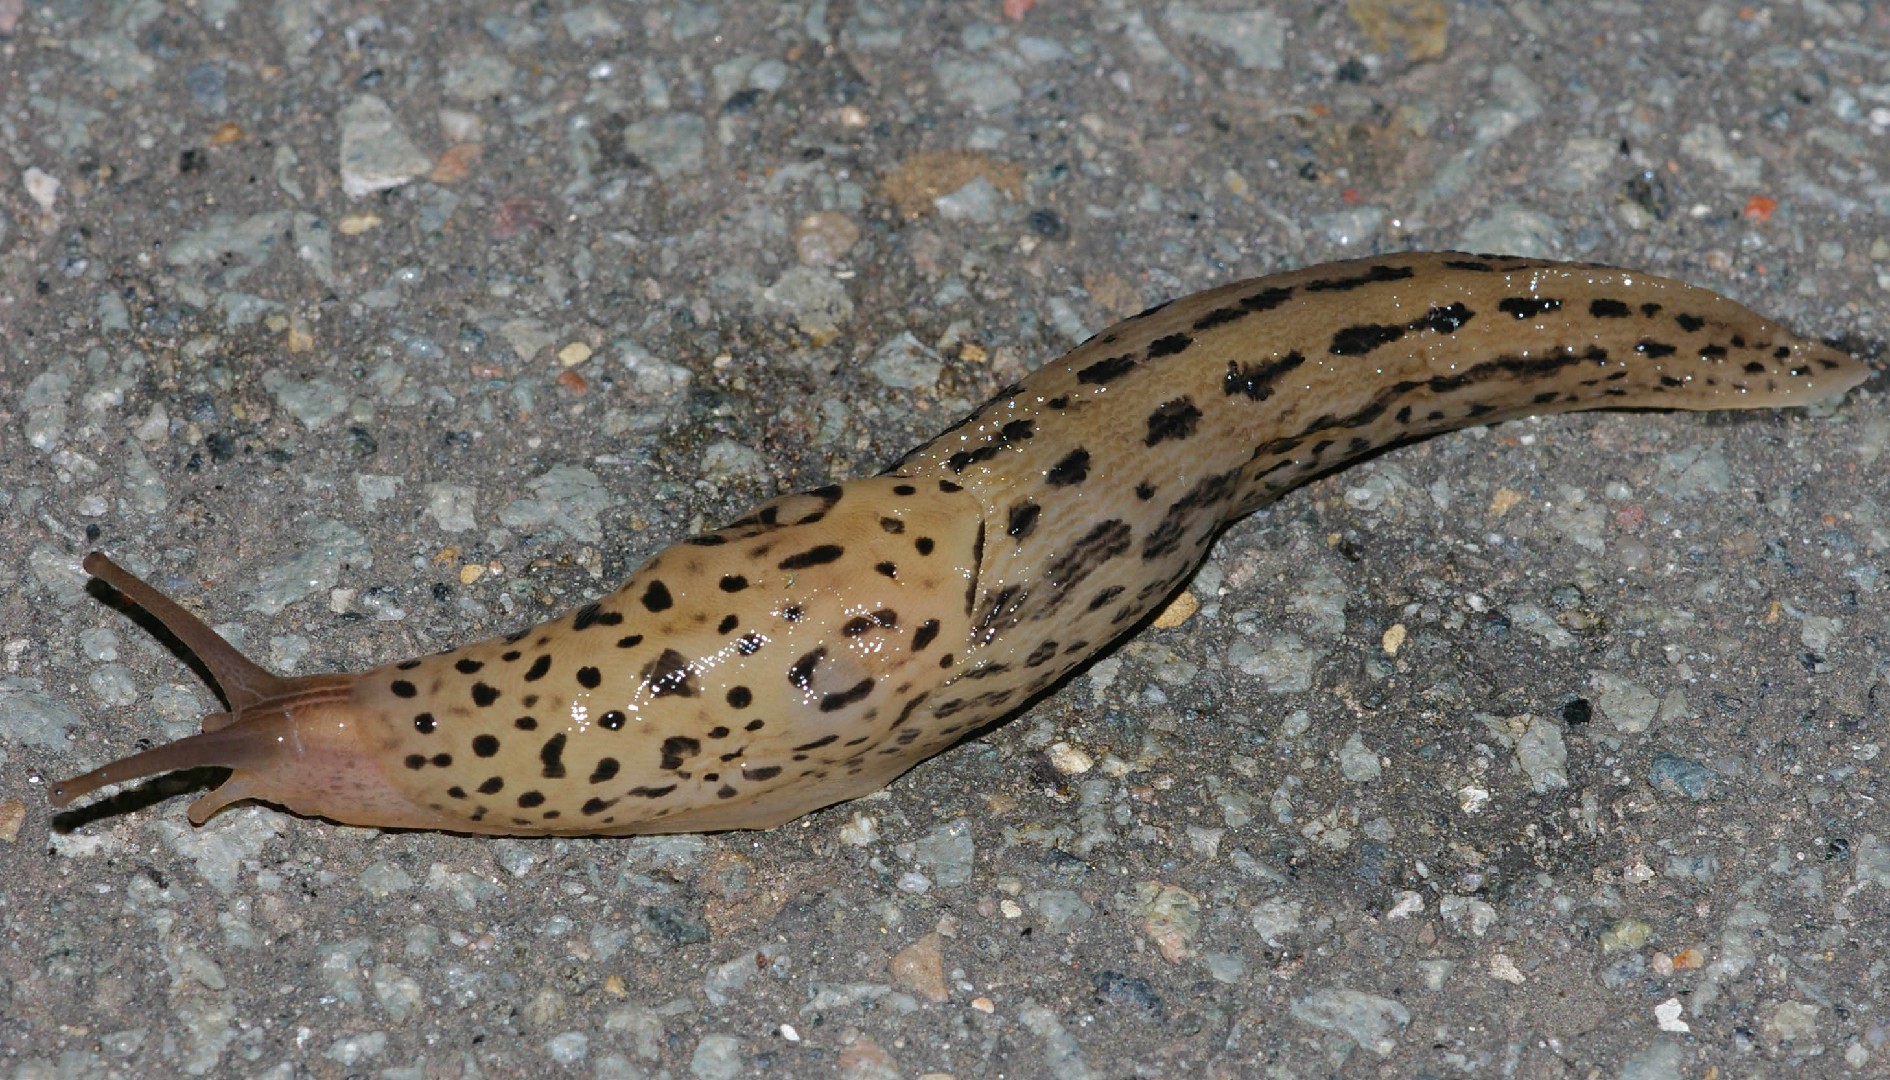 Garden slug (Limax)